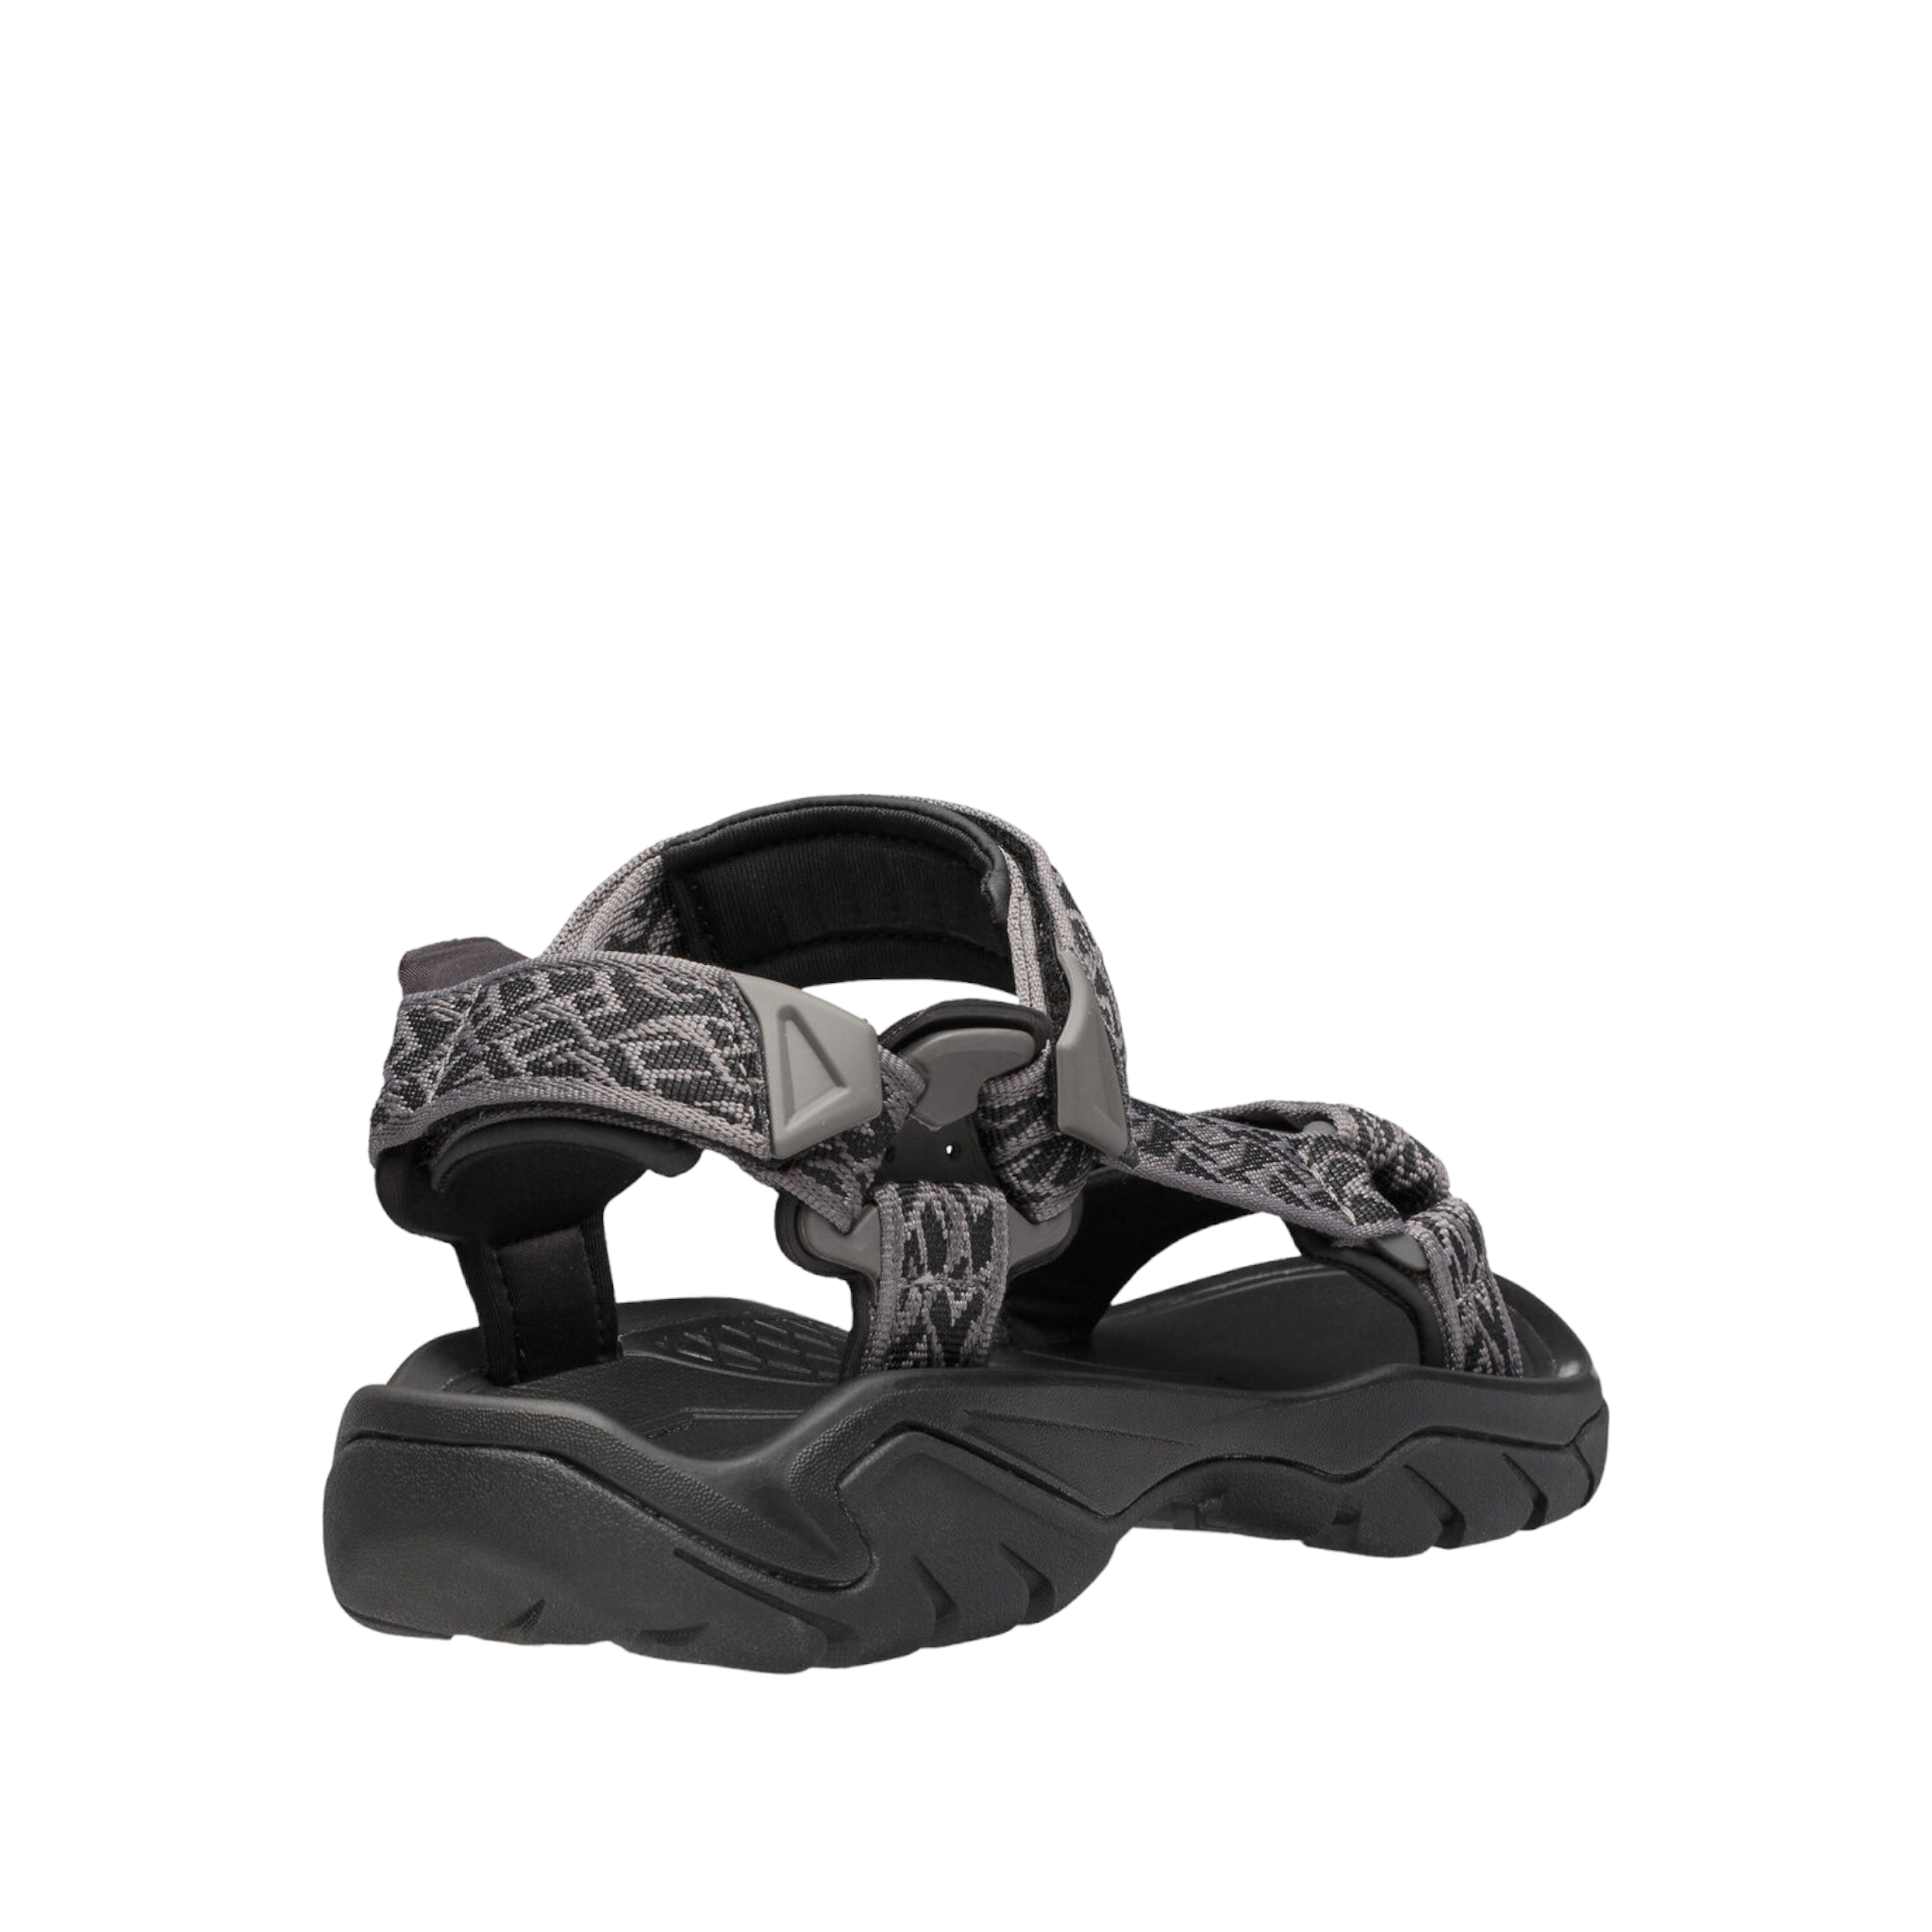 M Terra Fi 5 Universal - shoe&amp;me - Teva - Sandals - Mens, Sandal, Summer